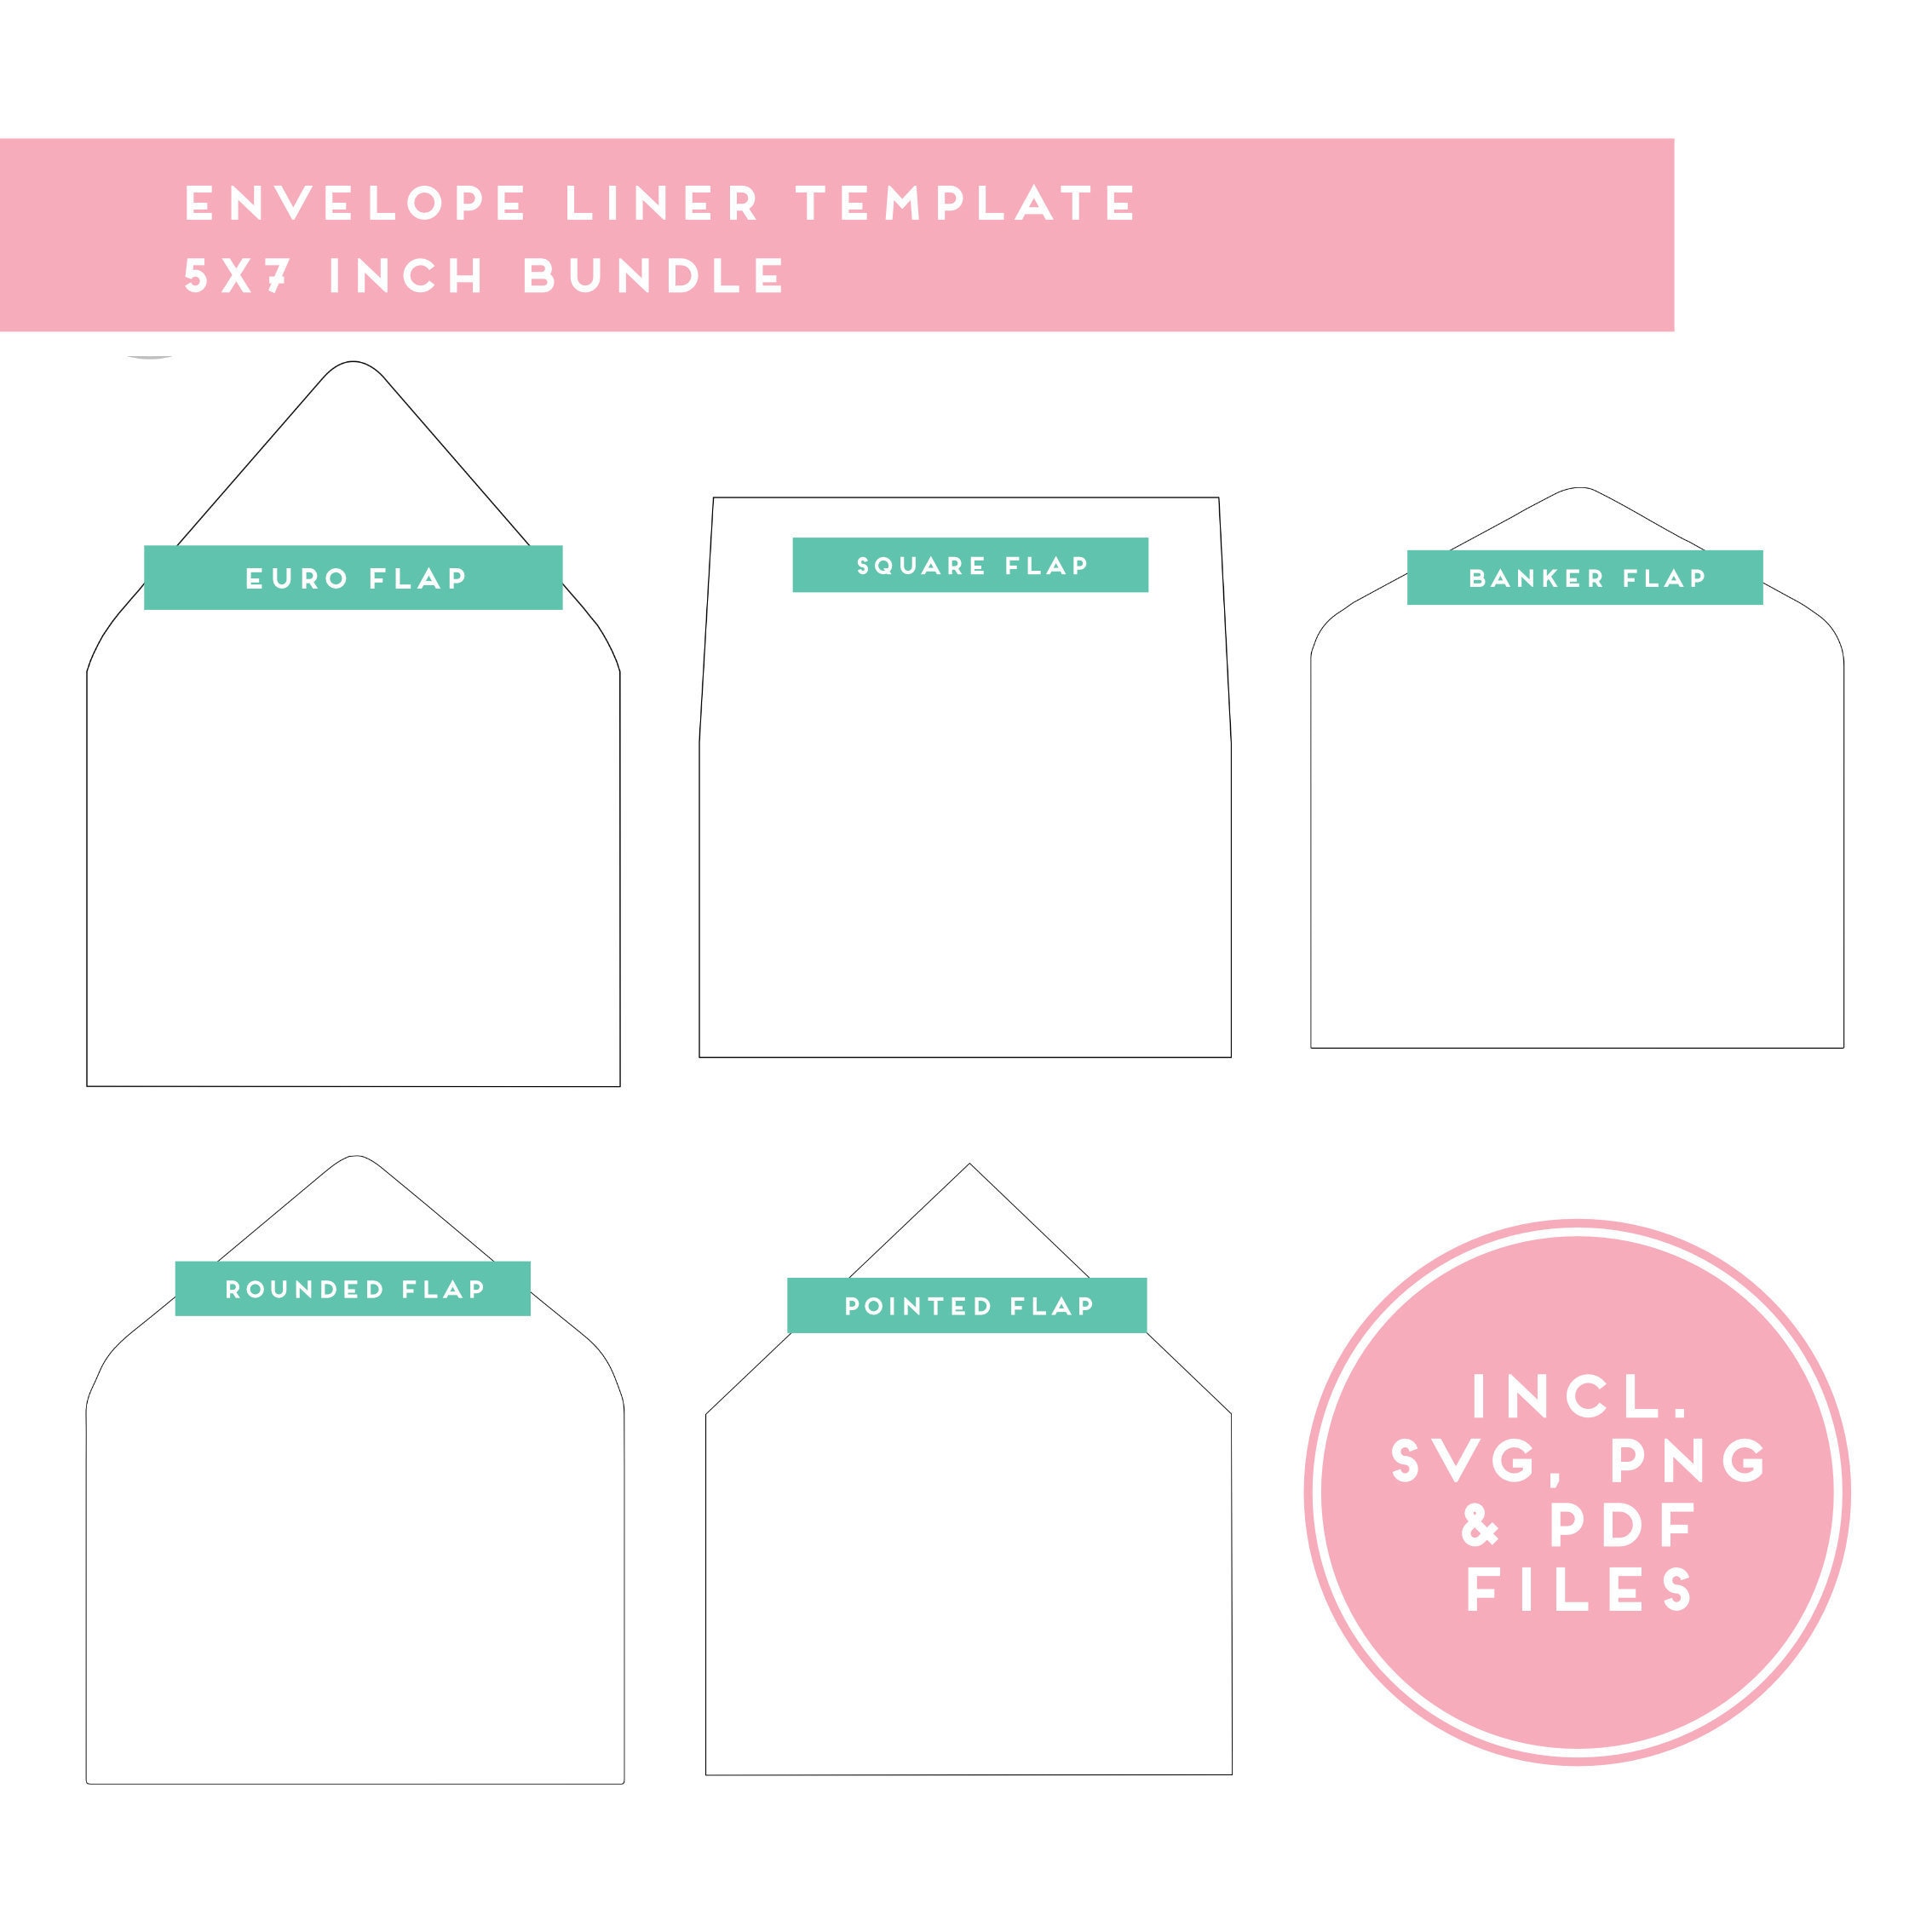 5x7-inch-envelope-liner-template-set-a7-printable-envelope-etsy